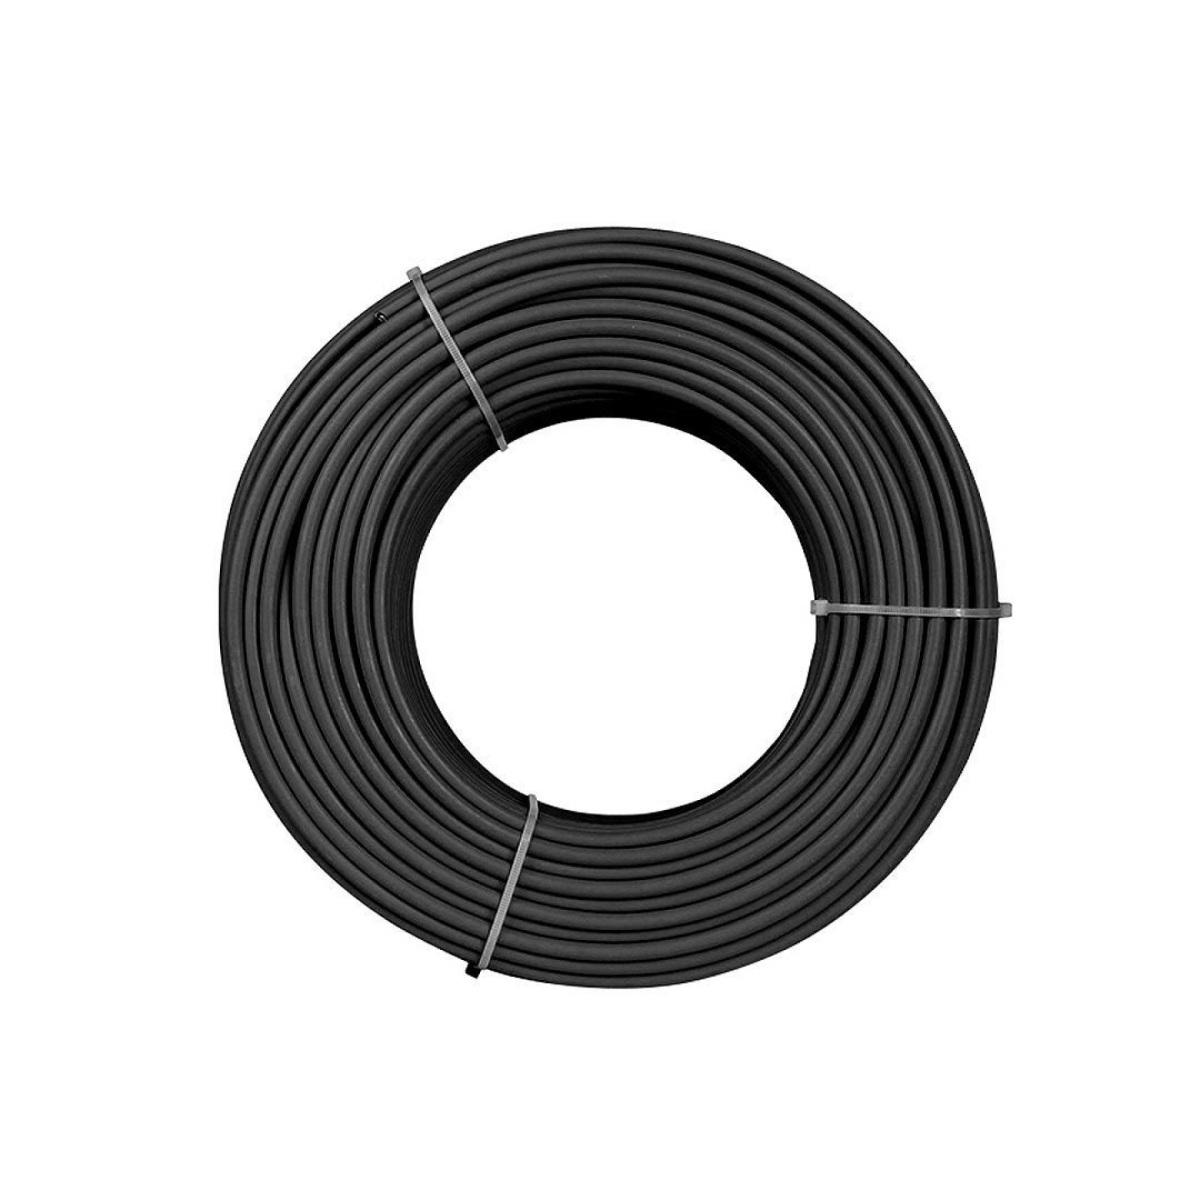 TommaTech 6.0 mm Solar Cable PVI1-F Black